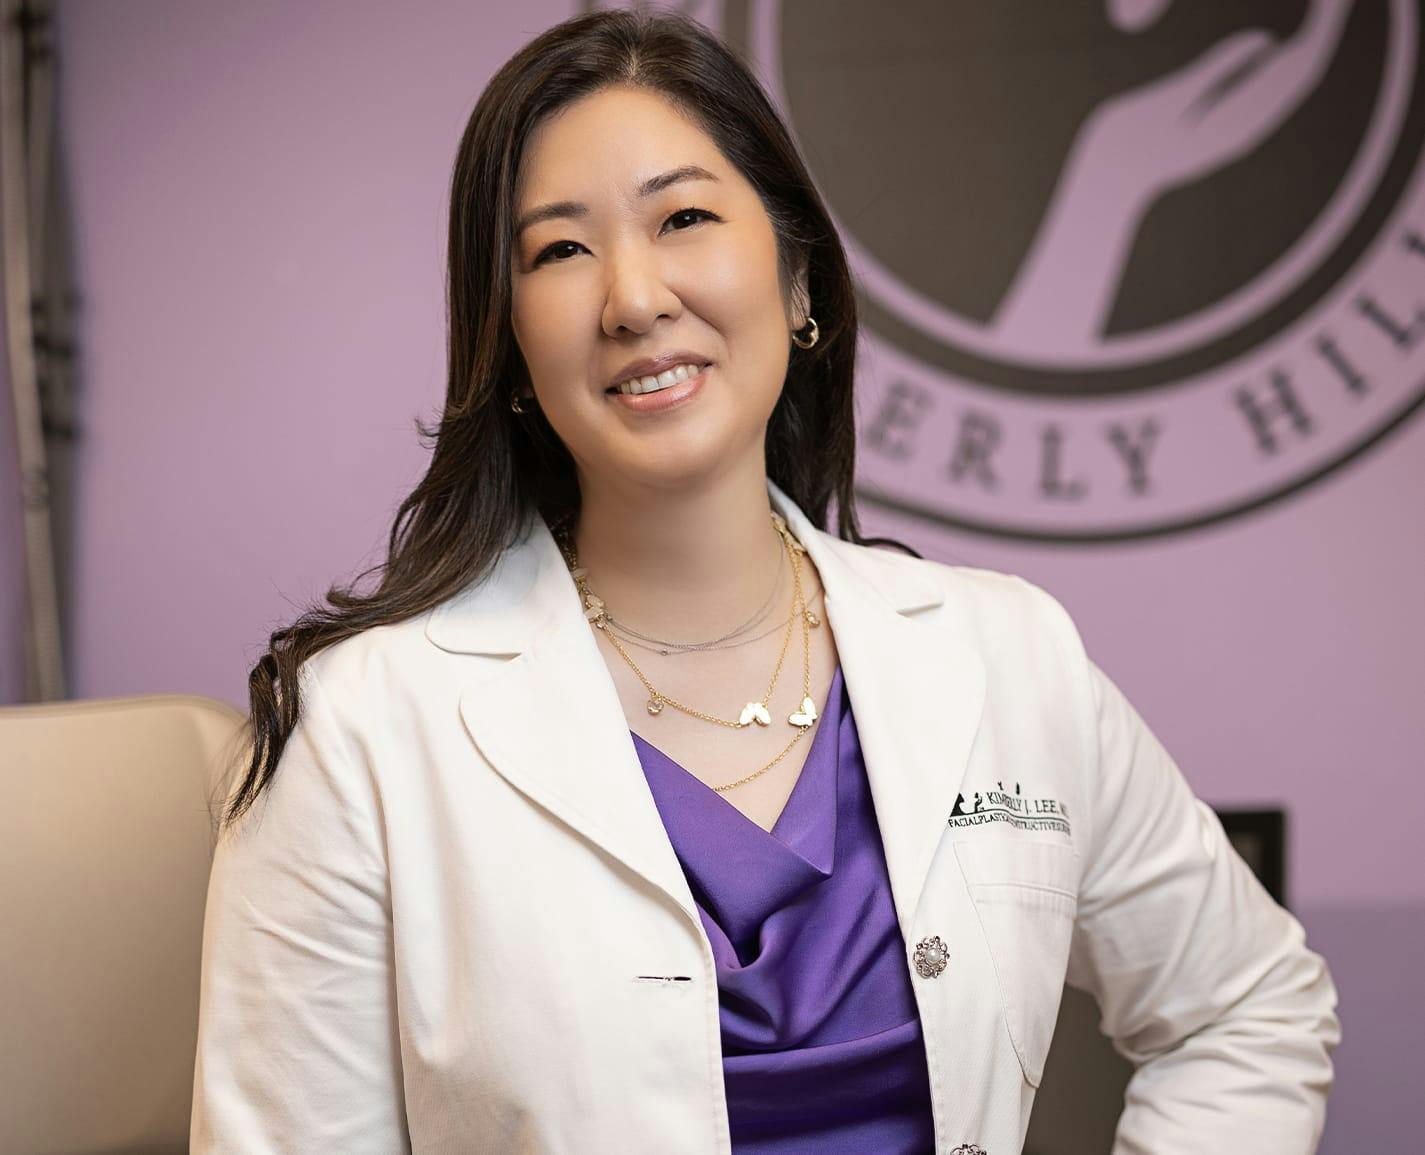 Female Plastic Surgeon Los Angeles | Dr. Kimberly Lee